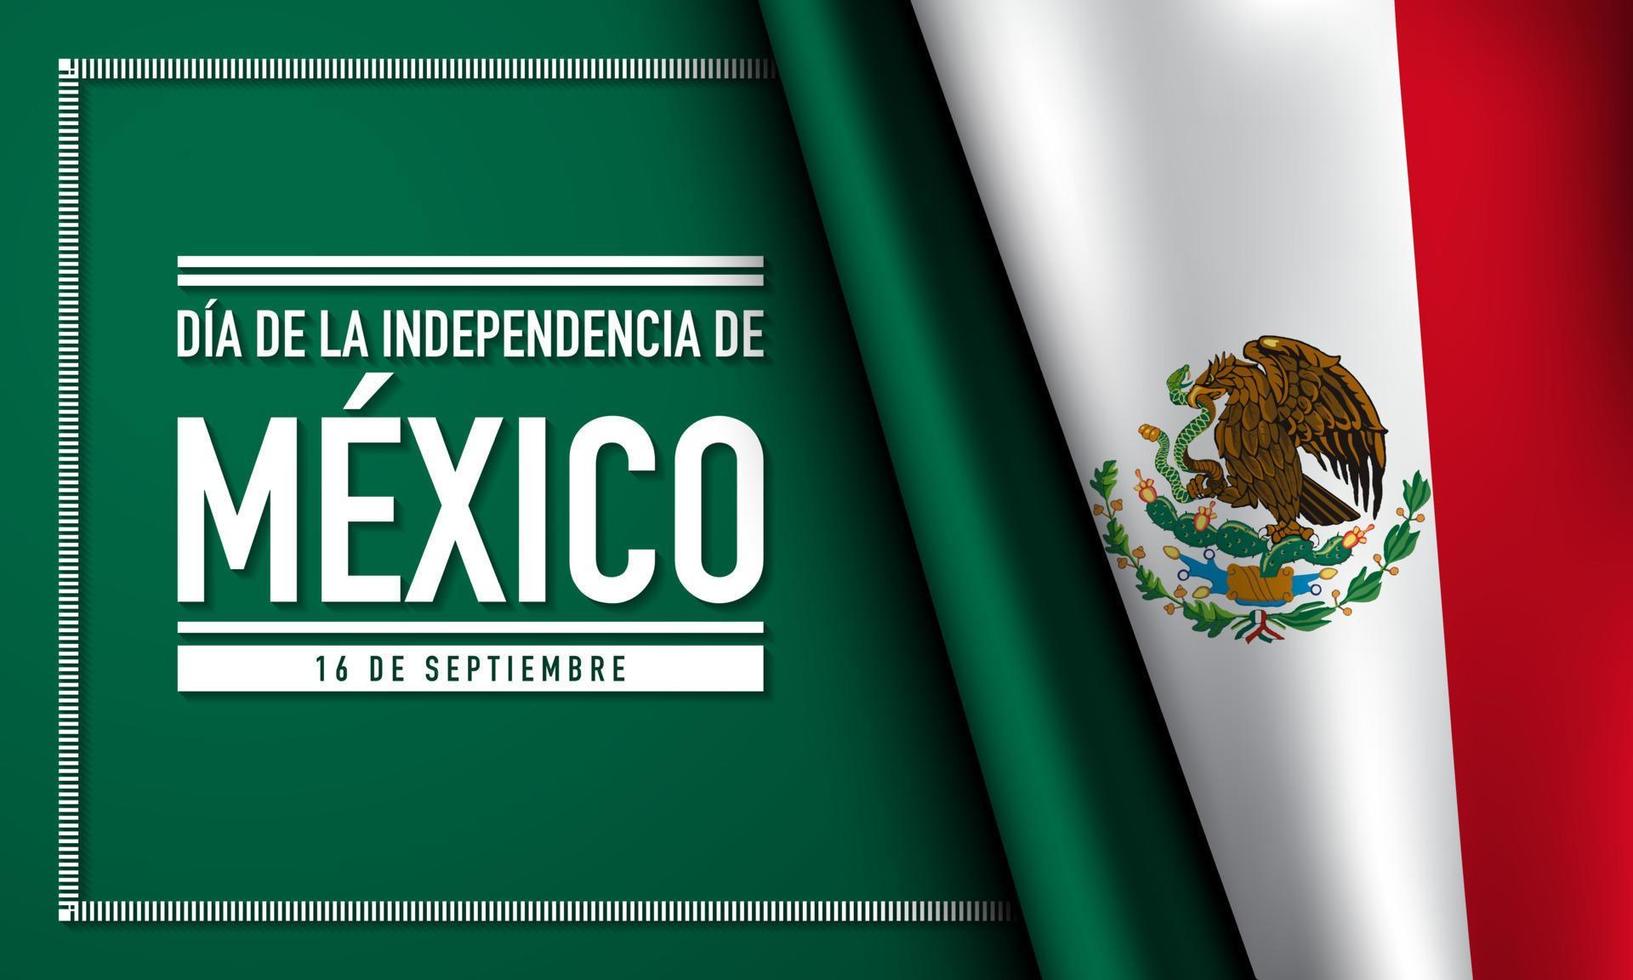 mexiko unabhängigkeitstag hintergrunddesign. vektor